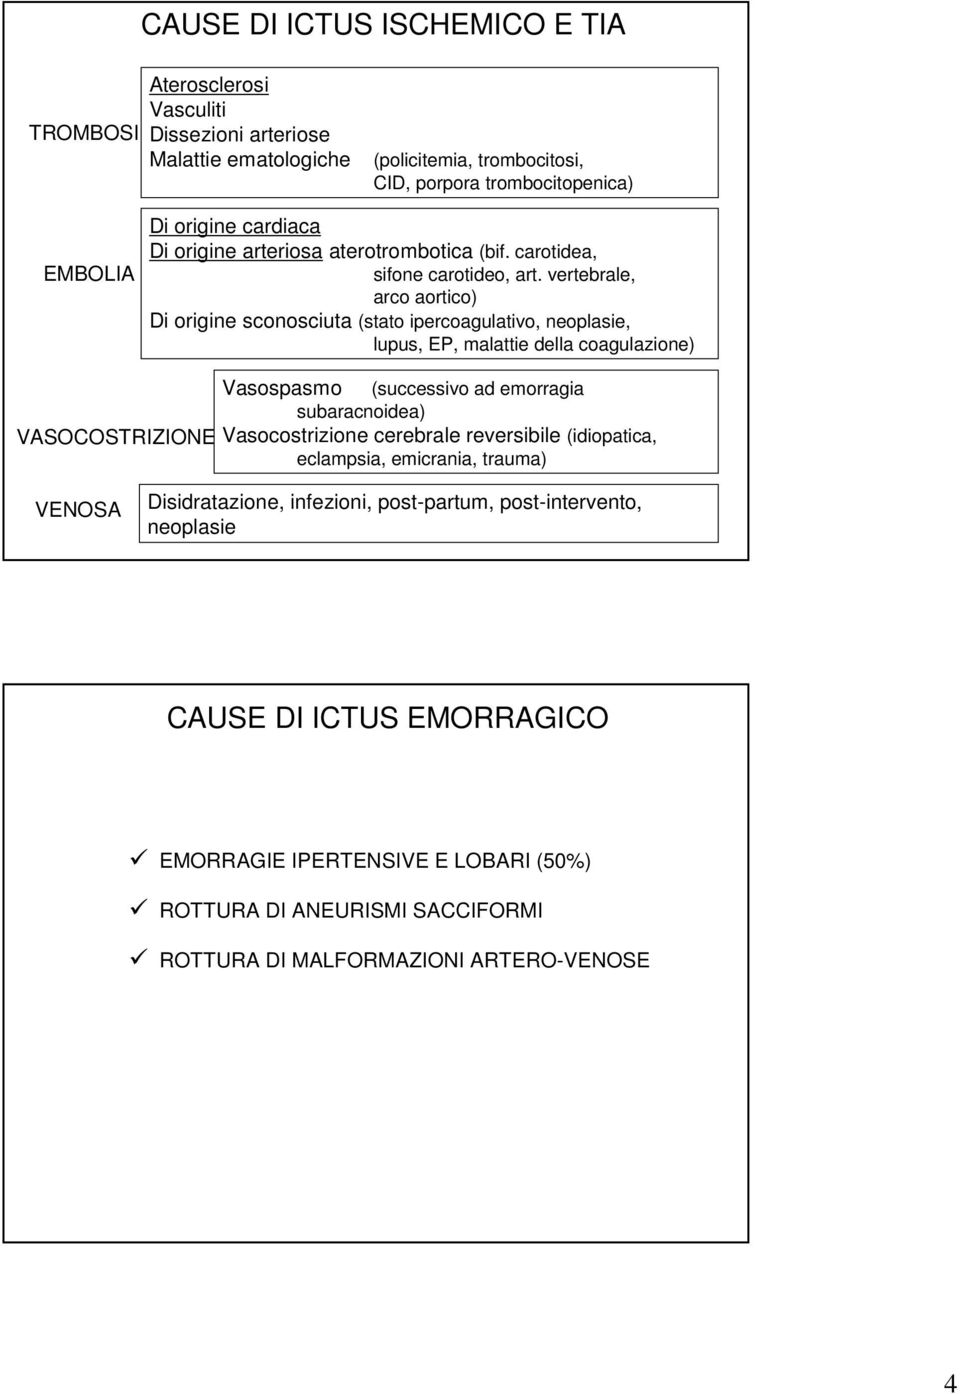 vertebrale, arco aortico) Di origine sconosciuta (stato ipercoagulativo, neoplasie, lupus, EP, malattie della coagulazione) Vasospasmo (successivo ad emorragia subaracnoidea)